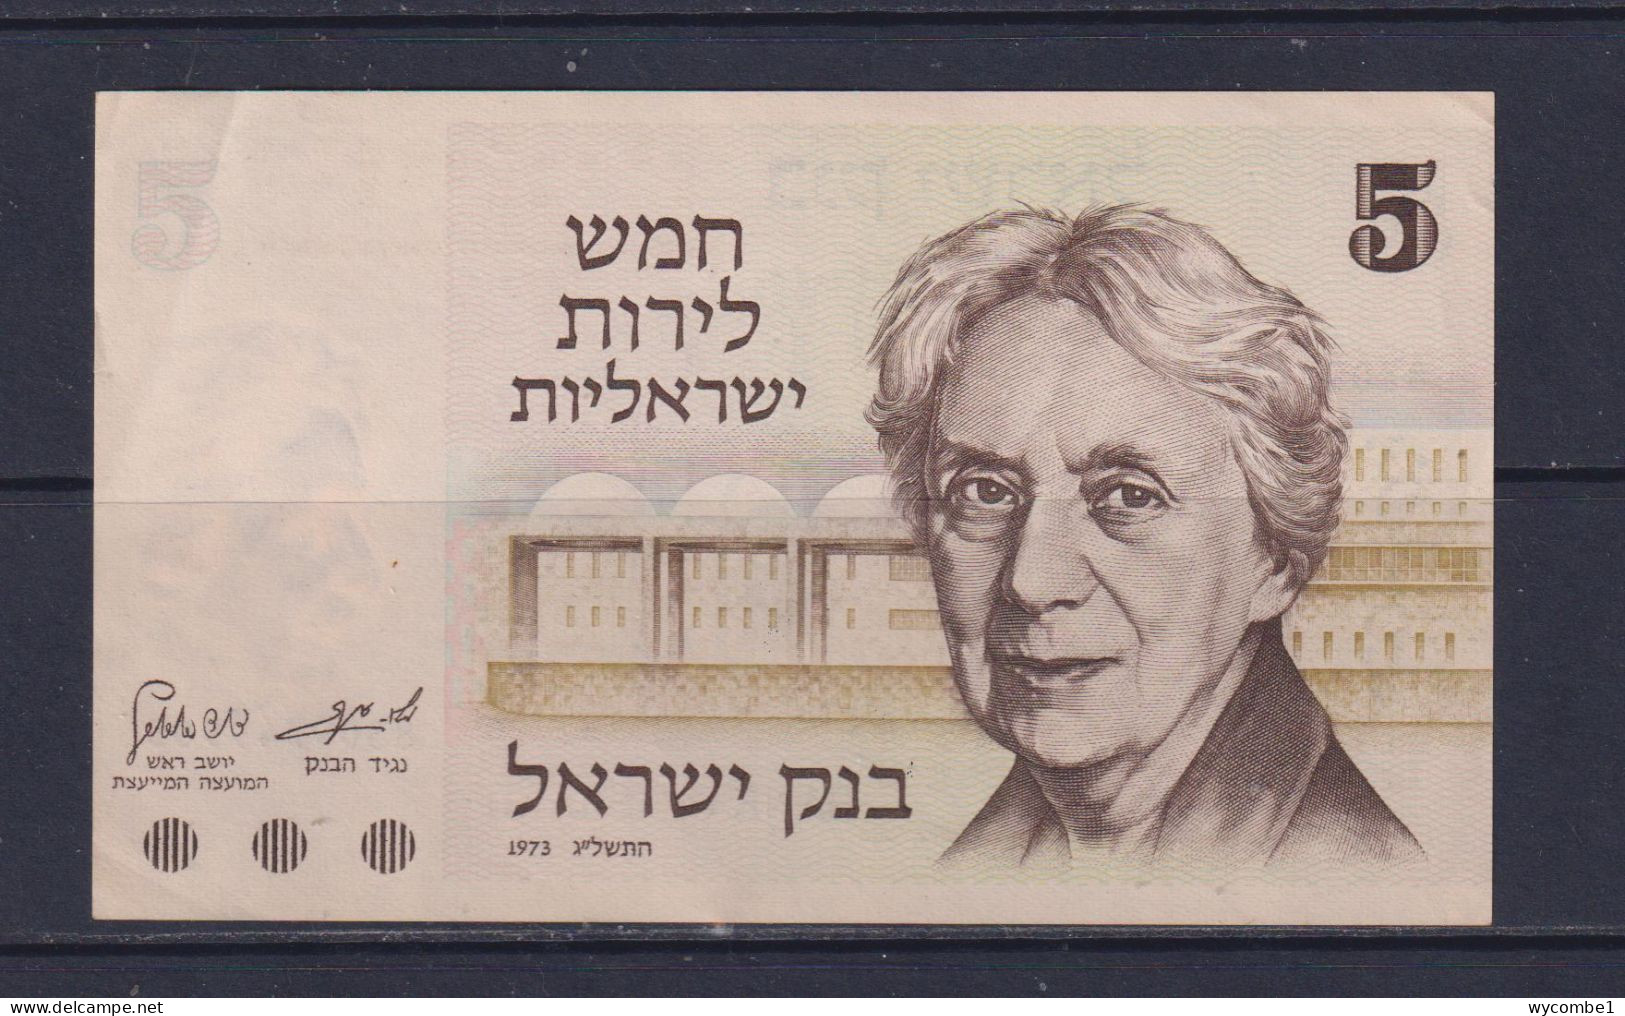 ISRAEL - 1973 5 Lirot Circulated Banknote - Israel